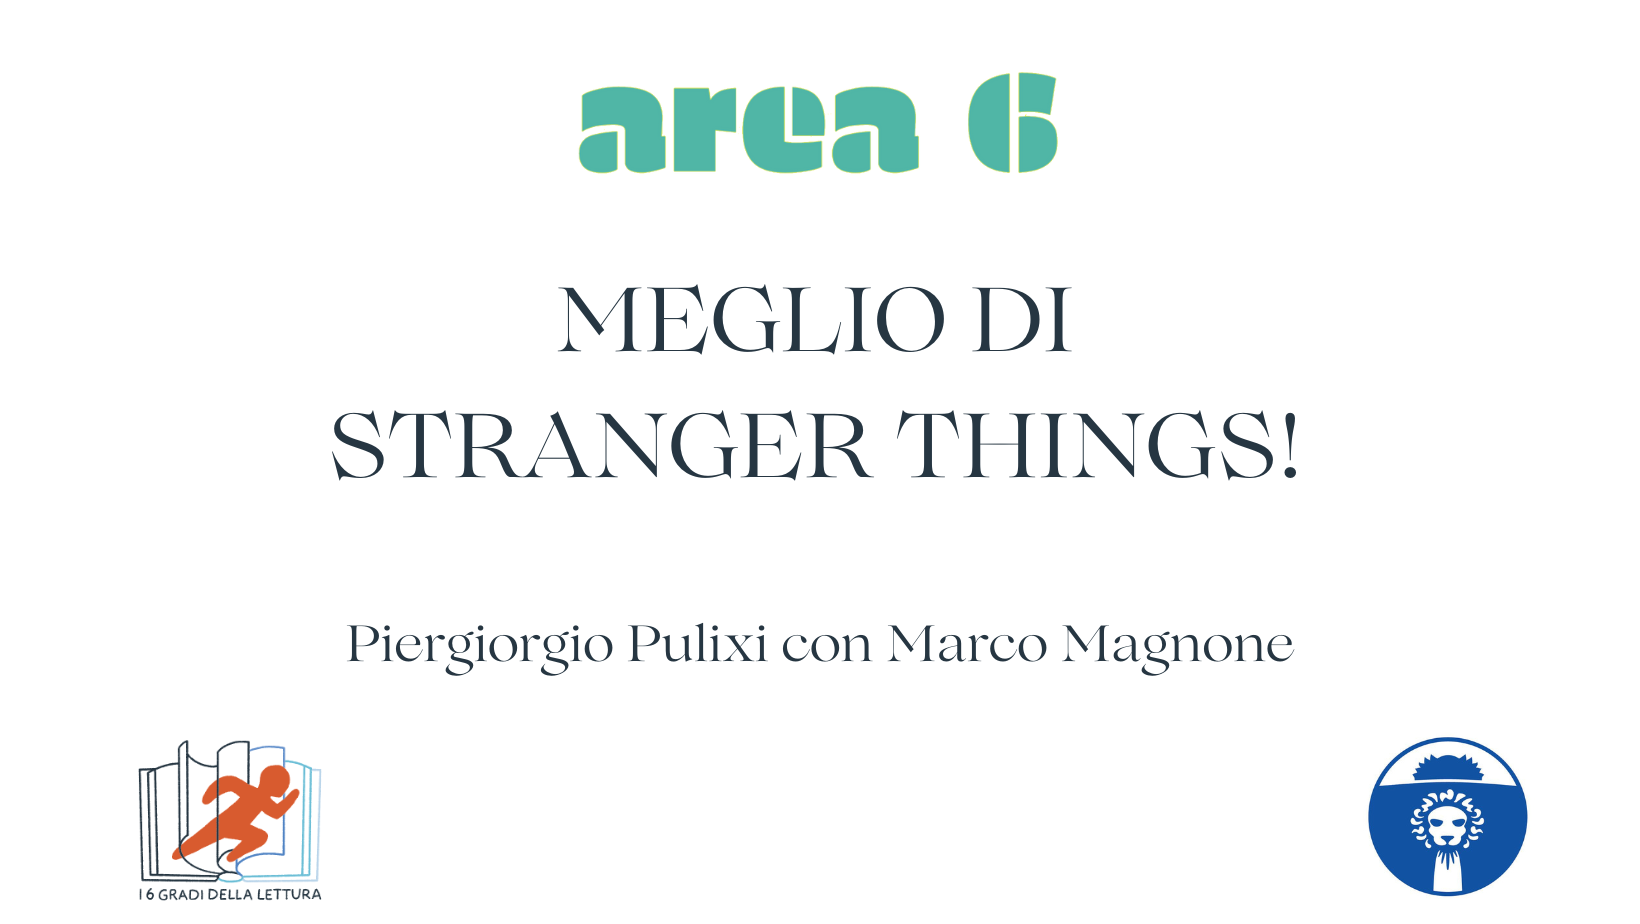 MEGLIO DI STRANGER THINGS!